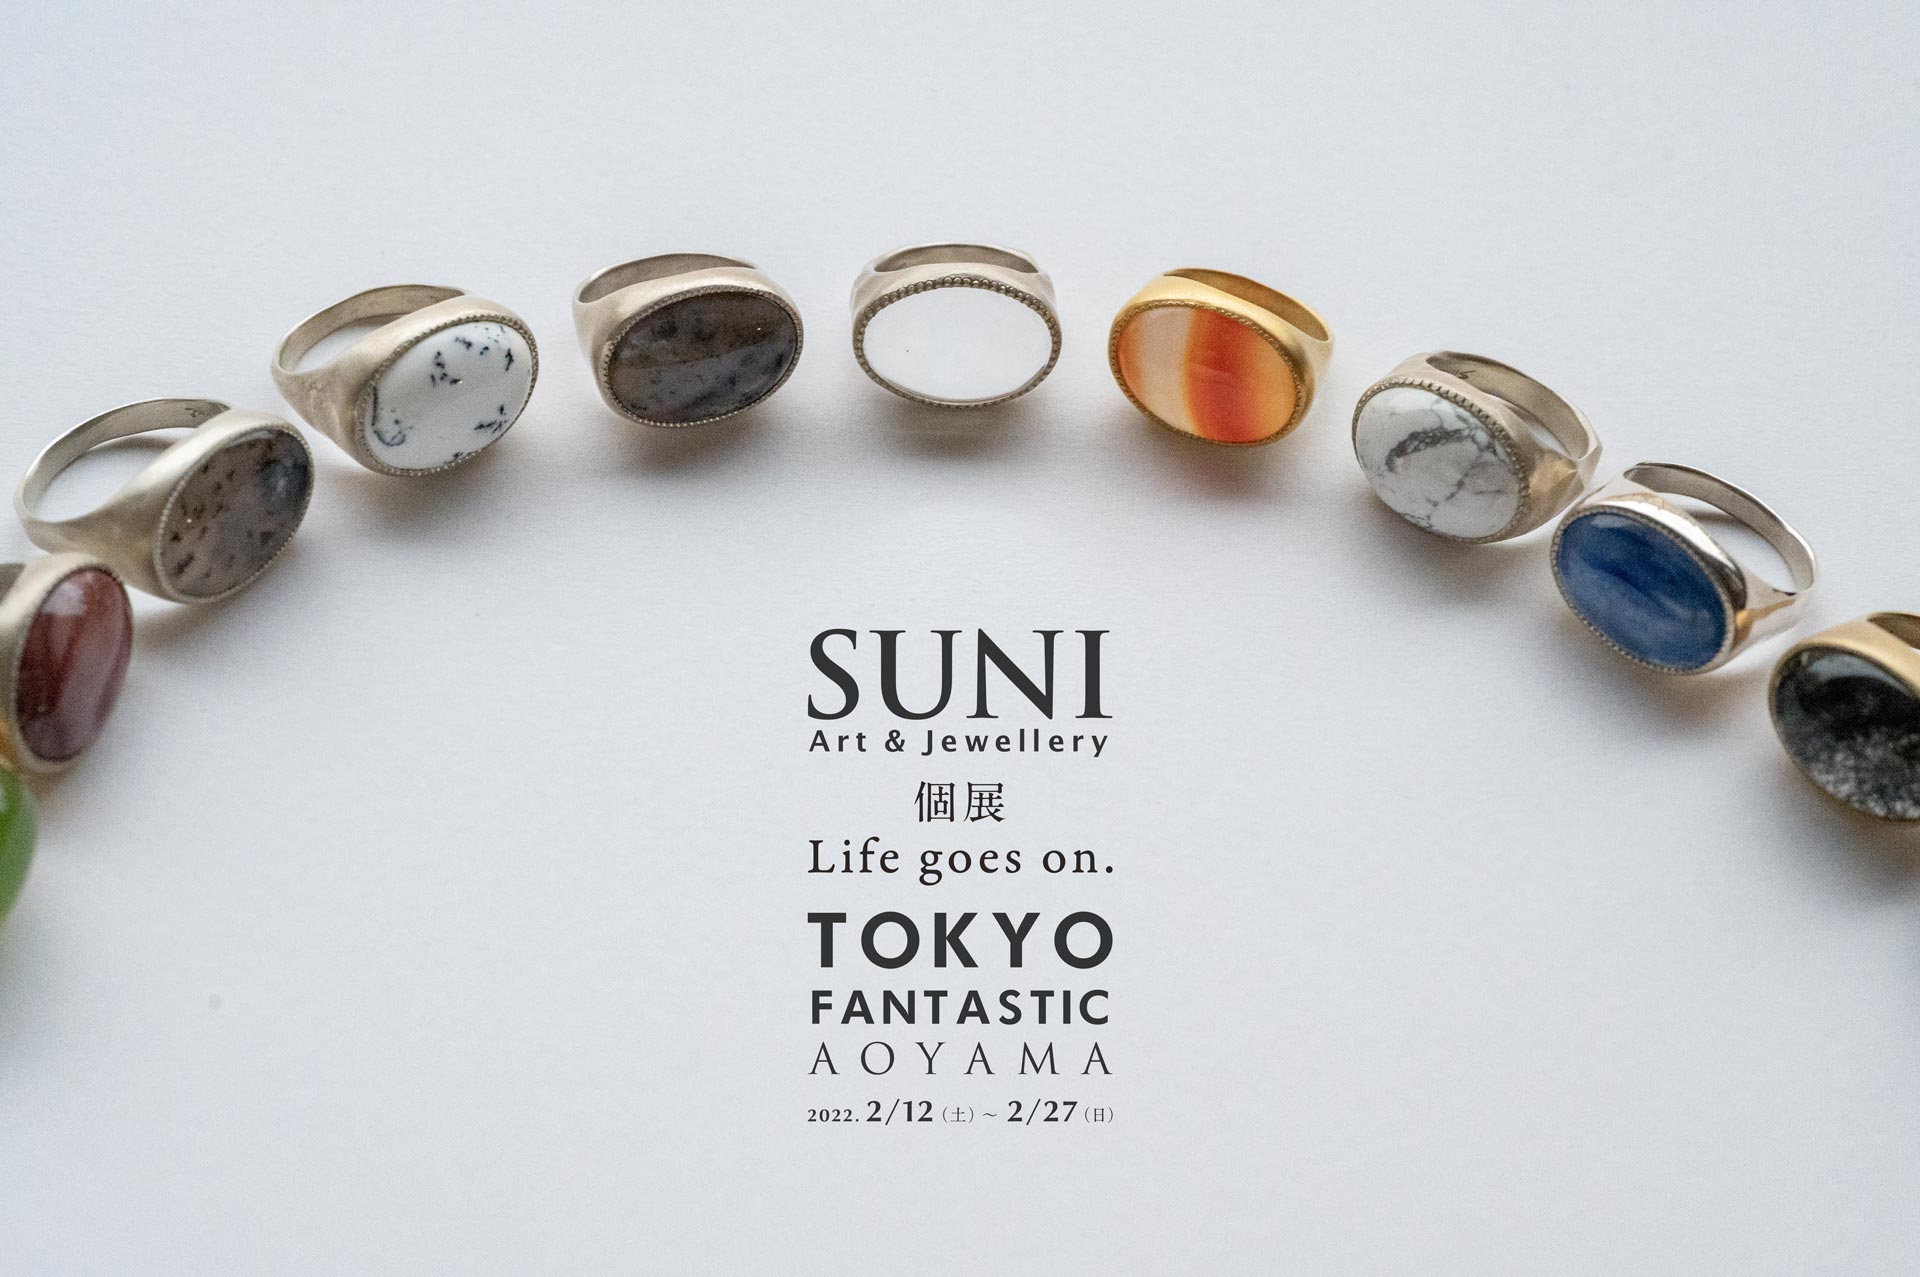 SUNI Art & Jewellery 個展「Life goes on.」@TOKYO FANTASTIC 青山店 2022. 2/12-2/27